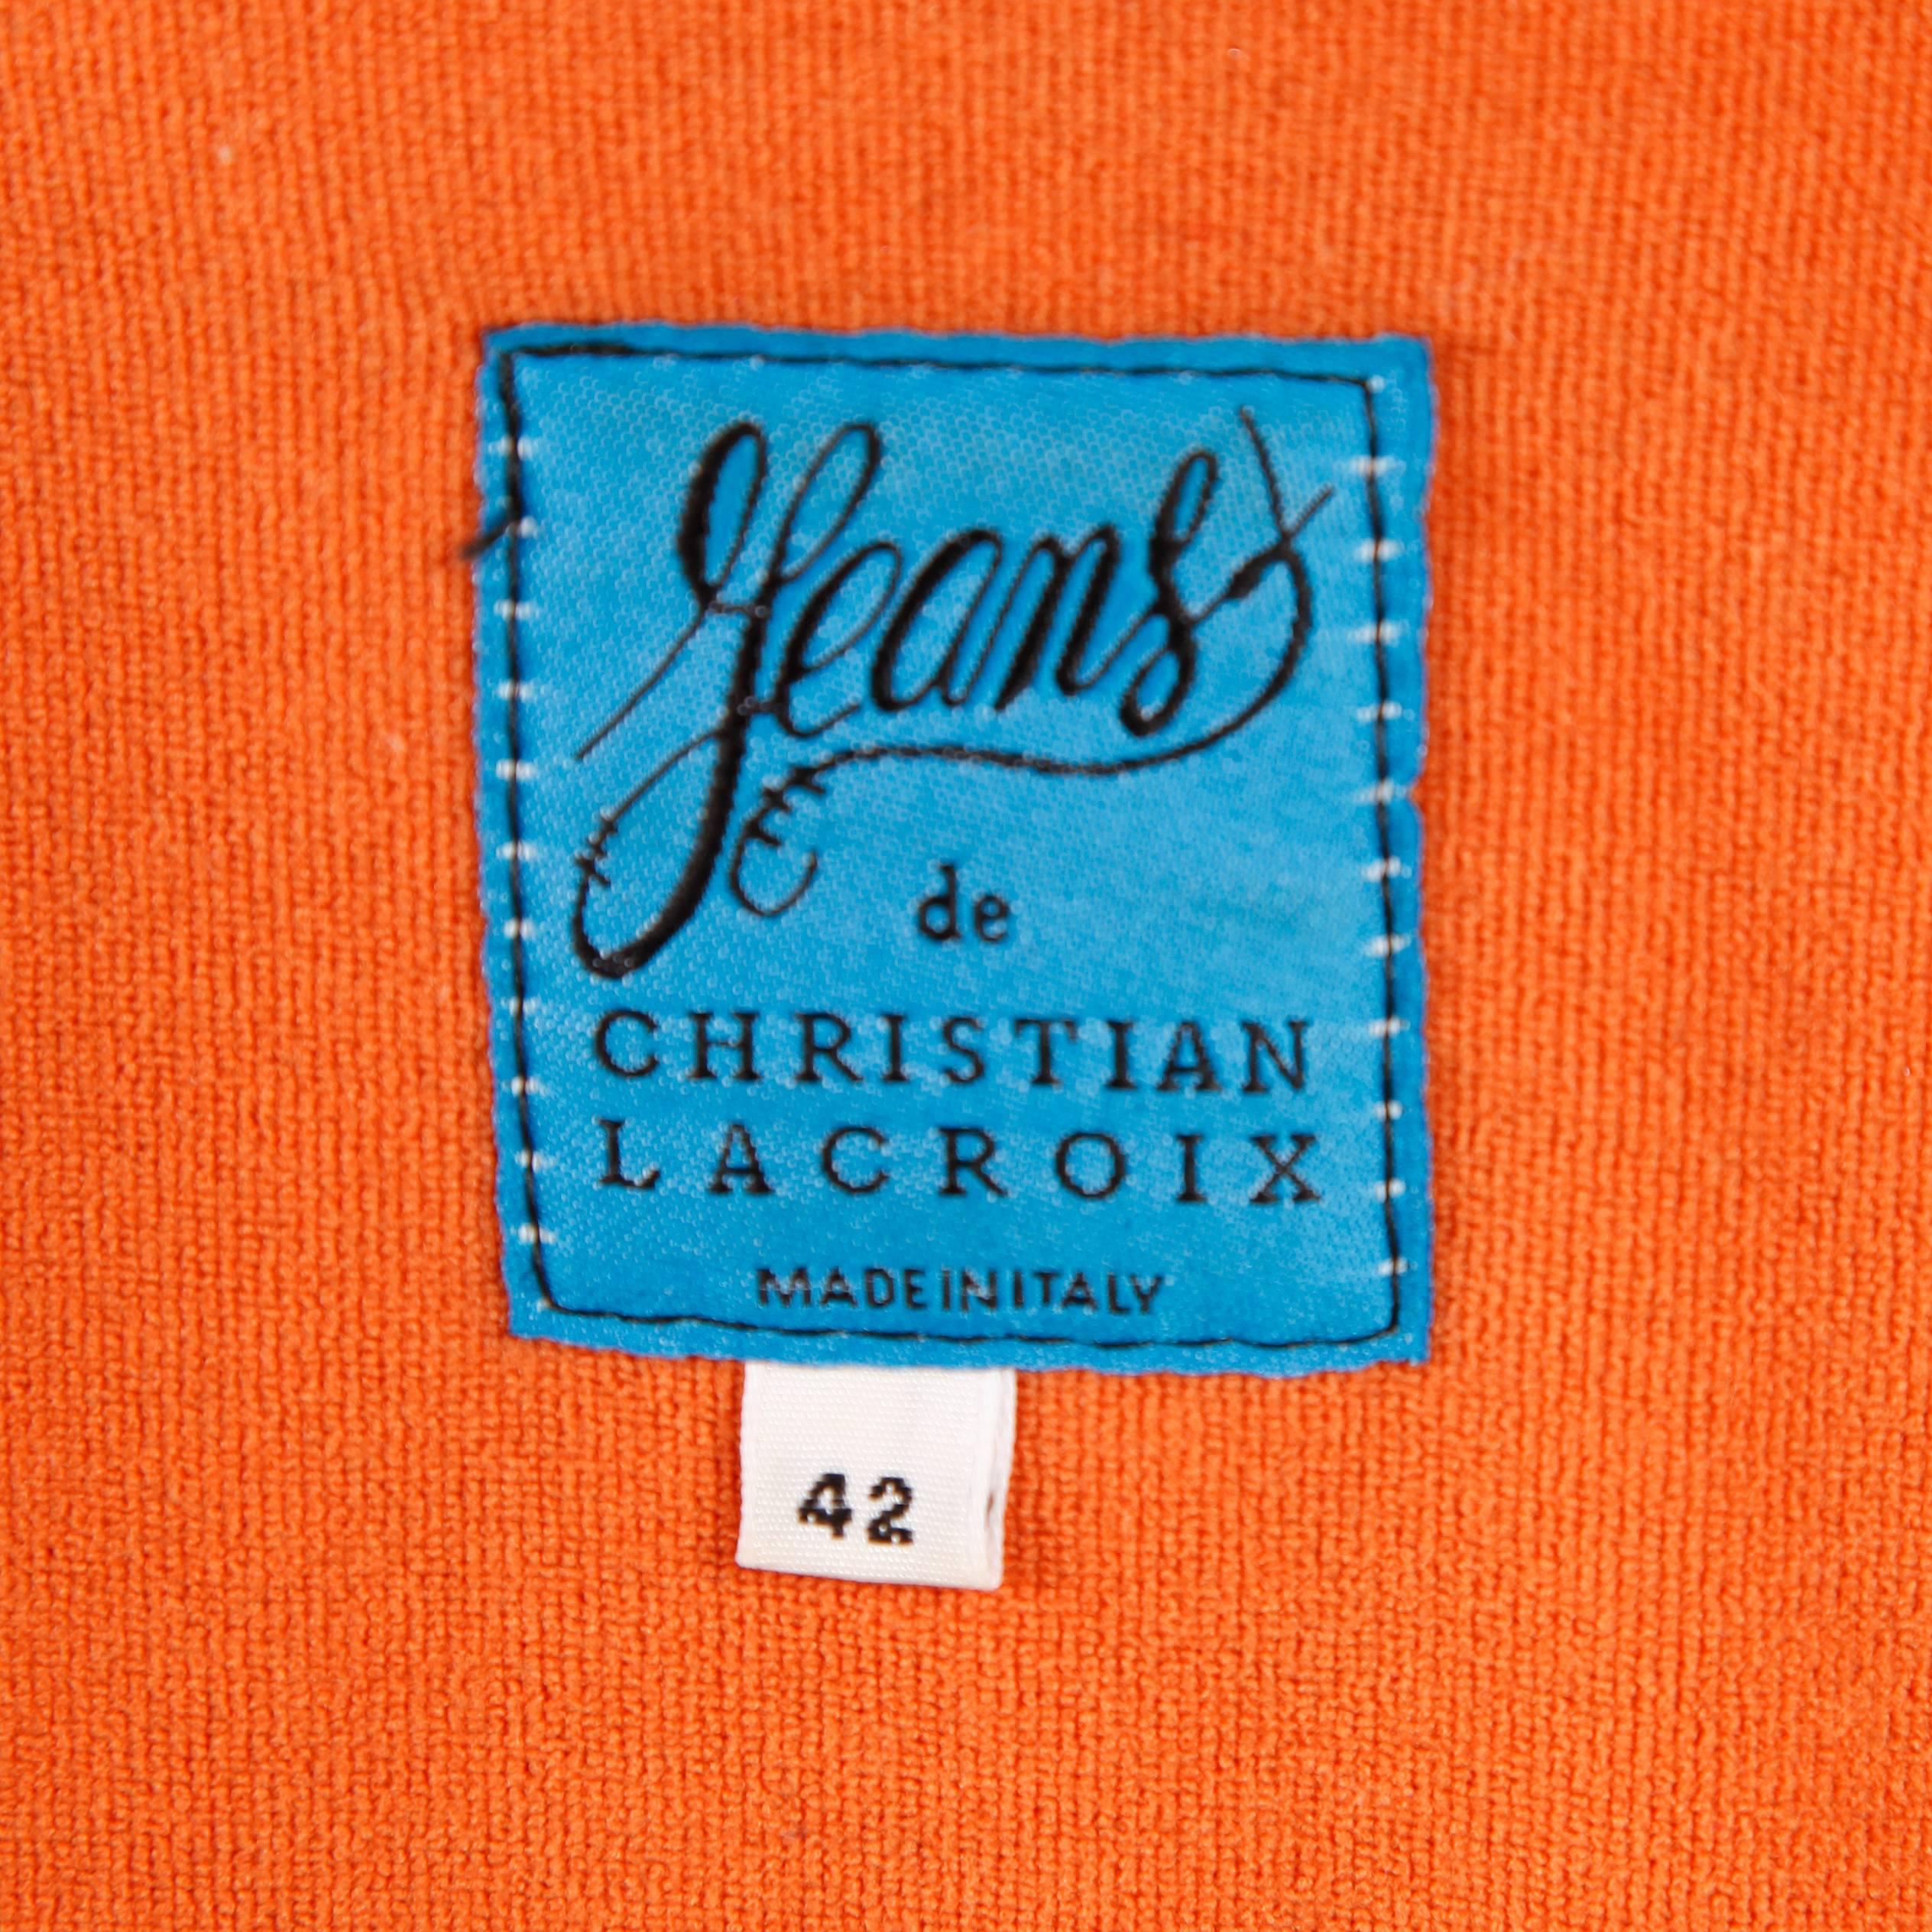 Christian Lacroix 1990s Vintage Black Neoprene Scuba Jacket + Skirt Ensemble In Excellent Condition For Sale In Sparks, NV